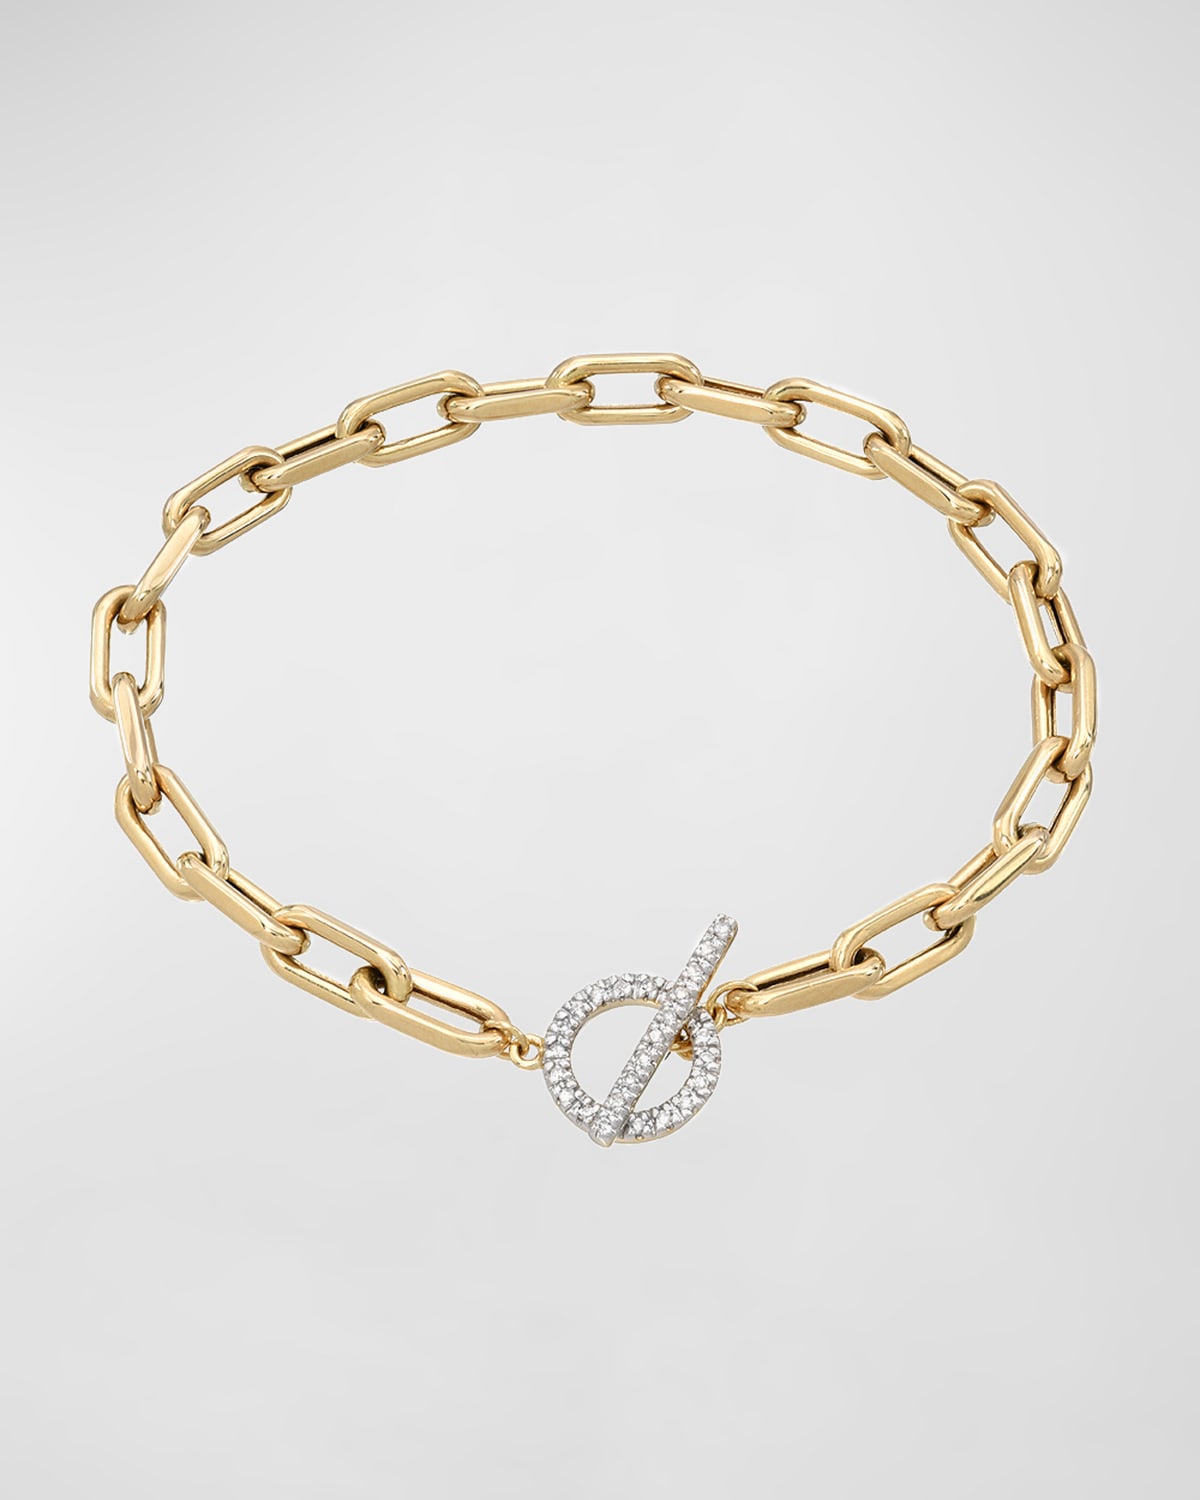 14k Gold Open-Link Chain Bracelet w/ Diamond Toggle